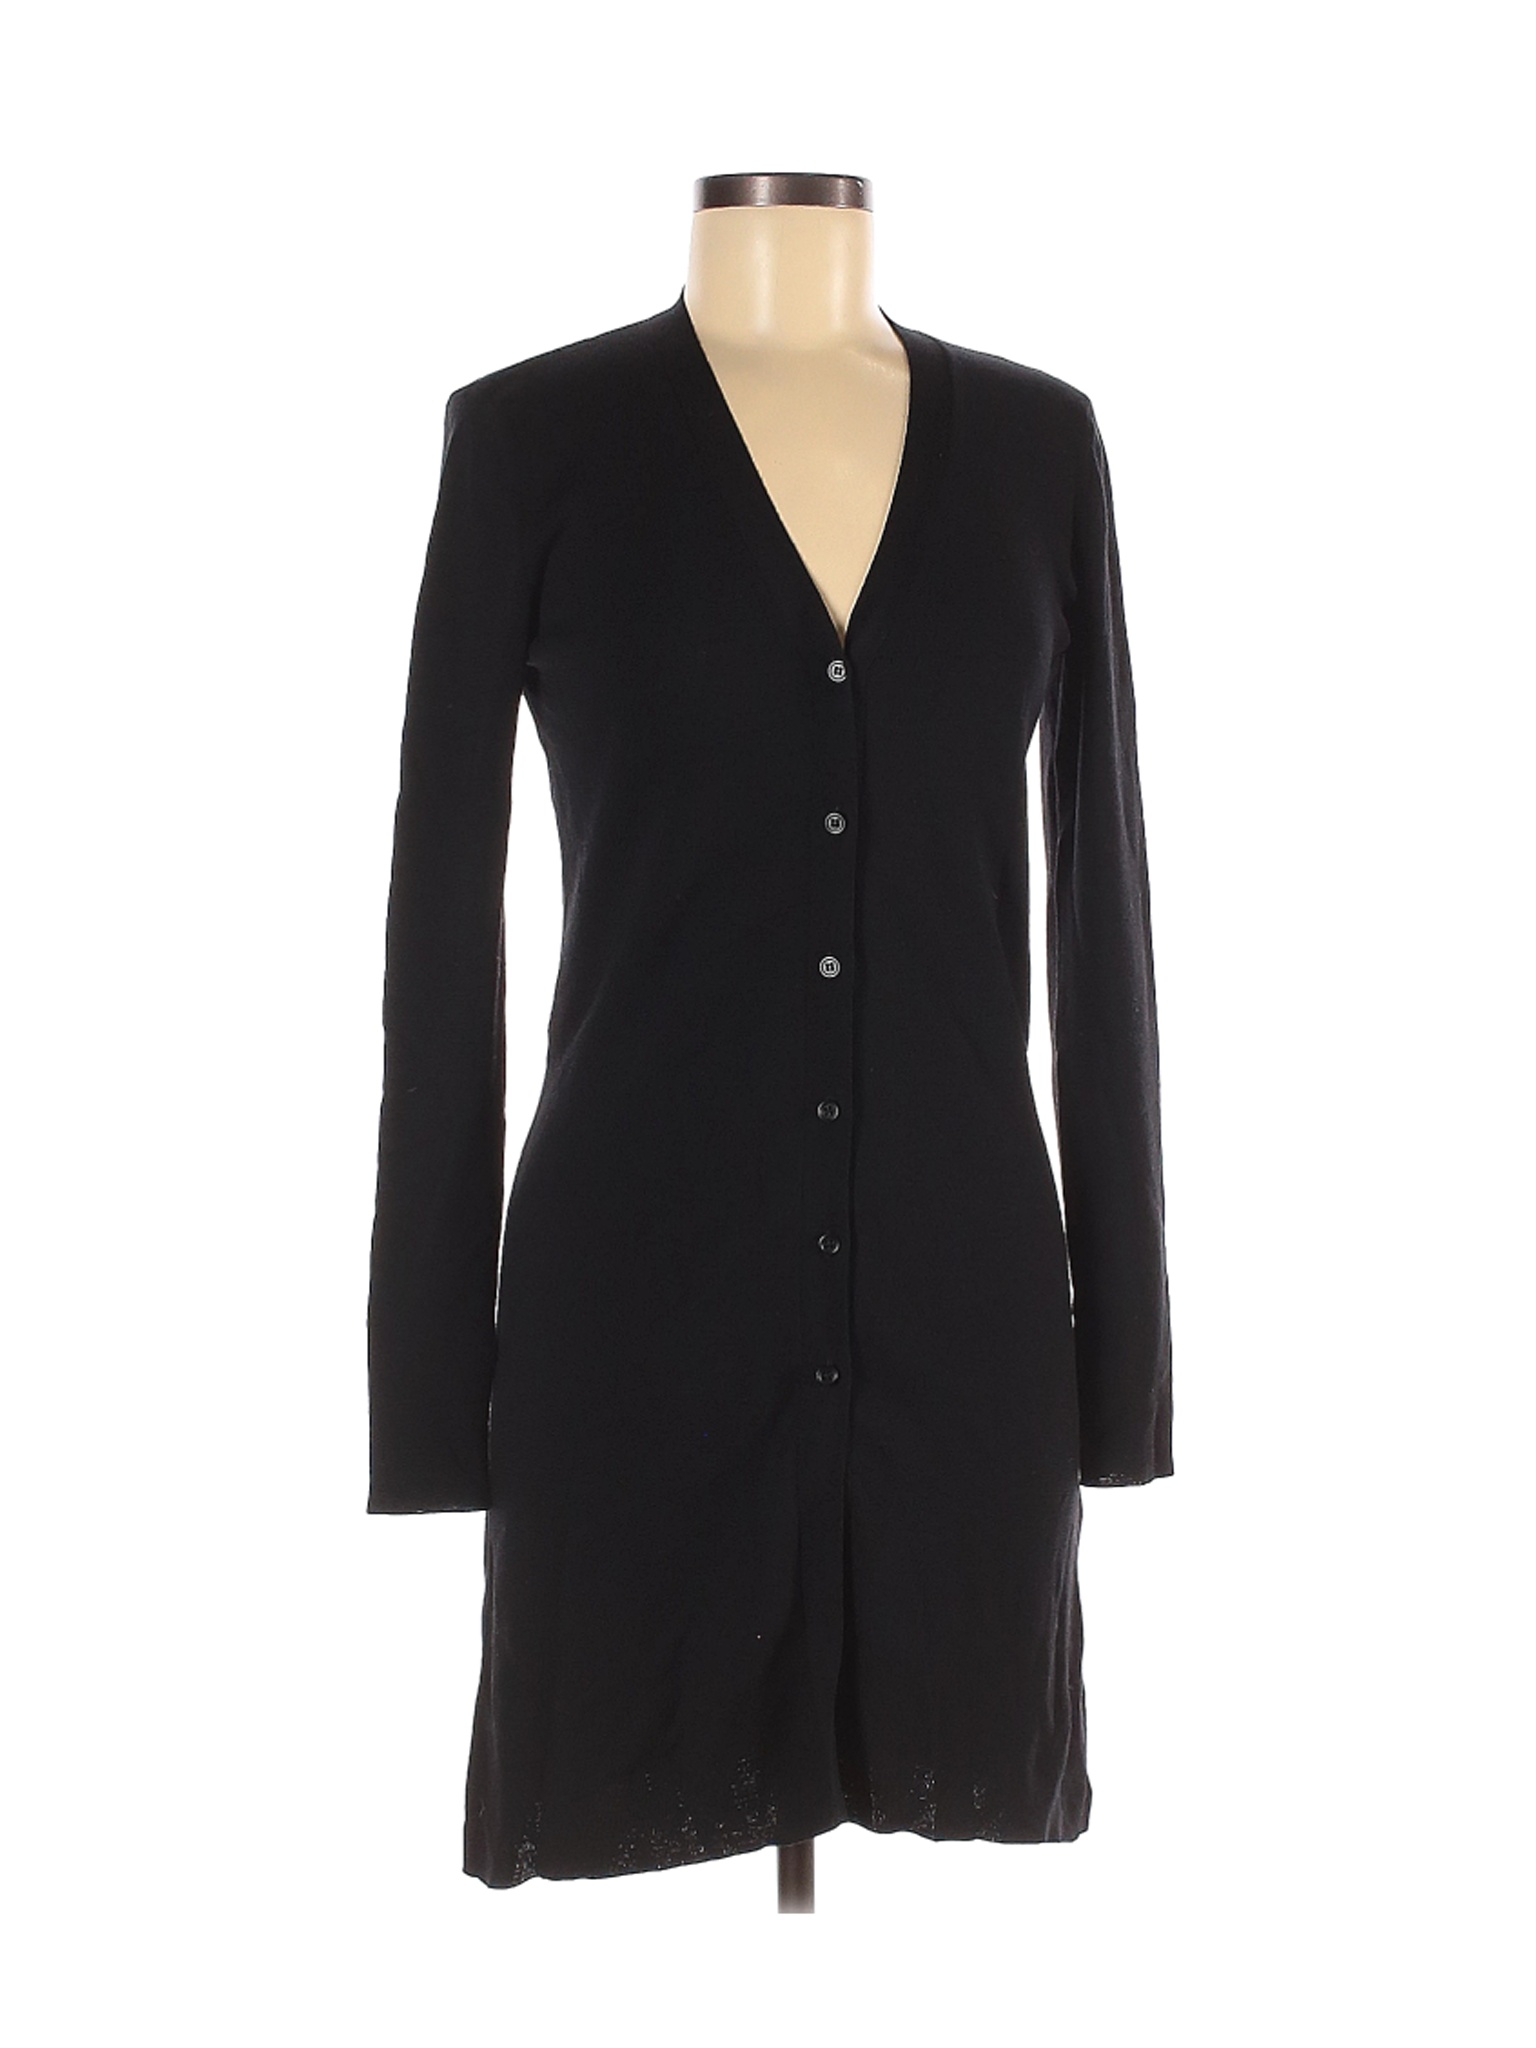 'S Max Mara Women Black Wool Cardigan M | eBay